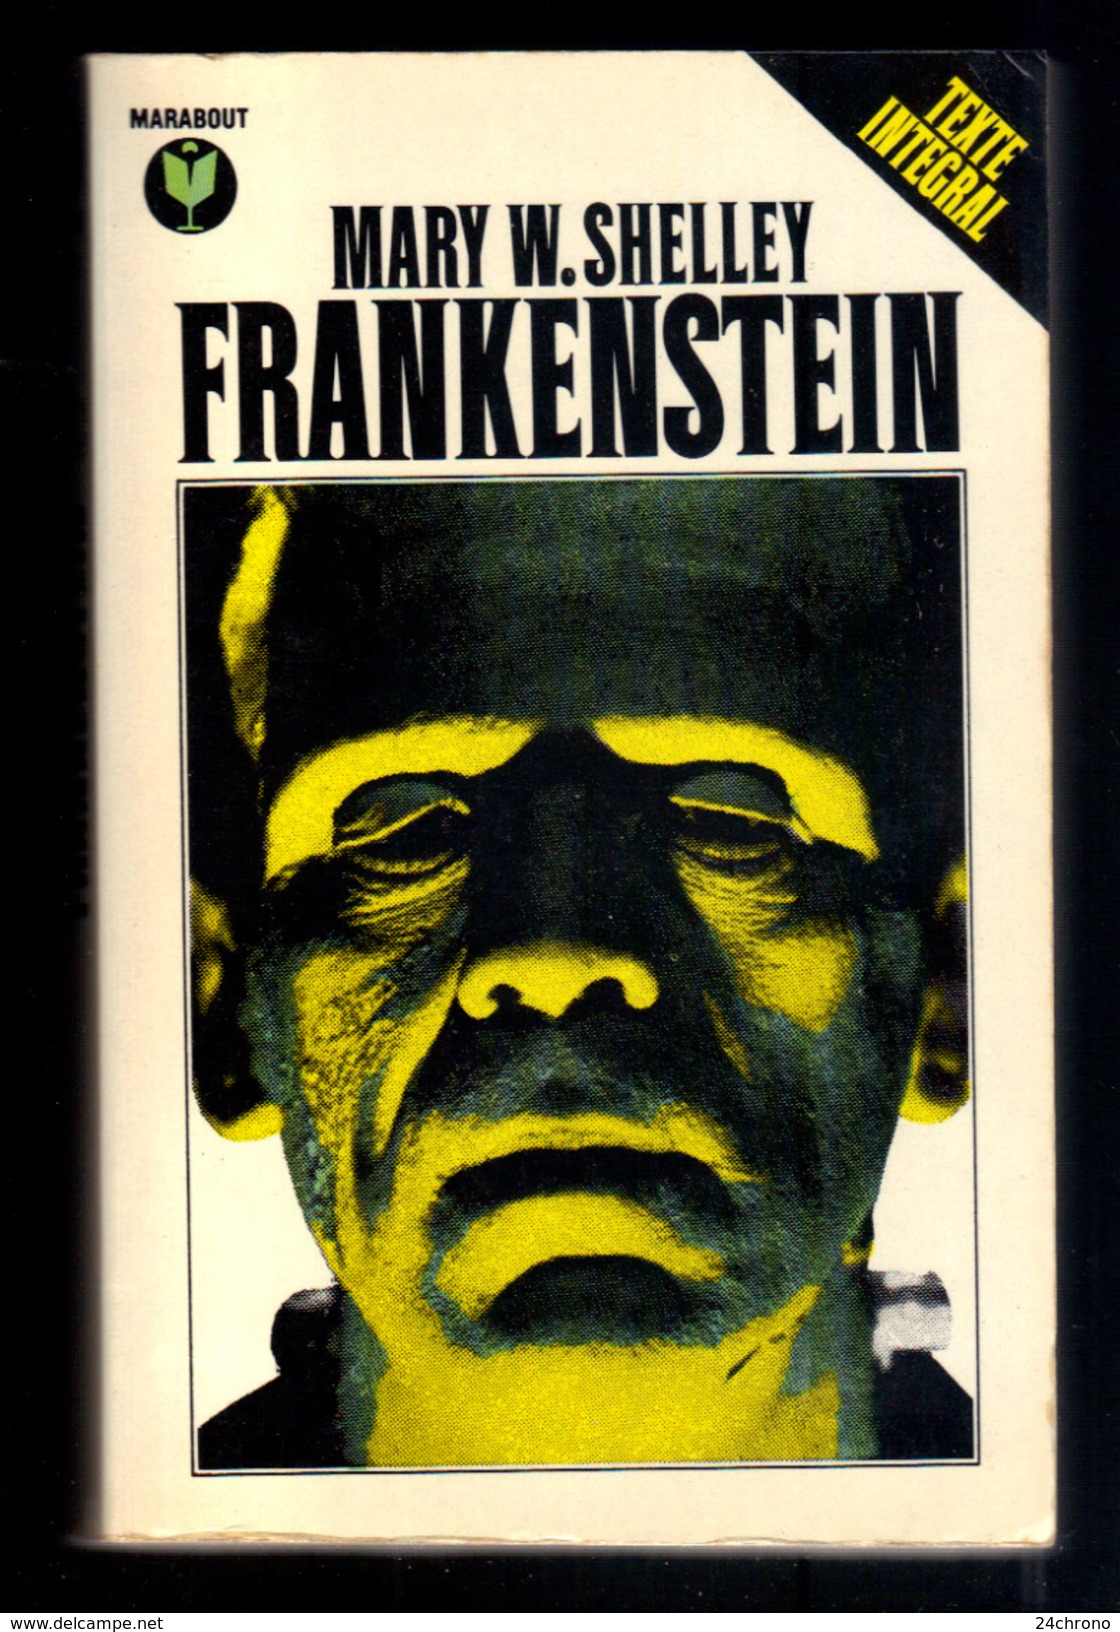 Livre: Frankenstein Par Mary W. Shelley, Texte Integral, Marabout (16-2868) - Marabout SF